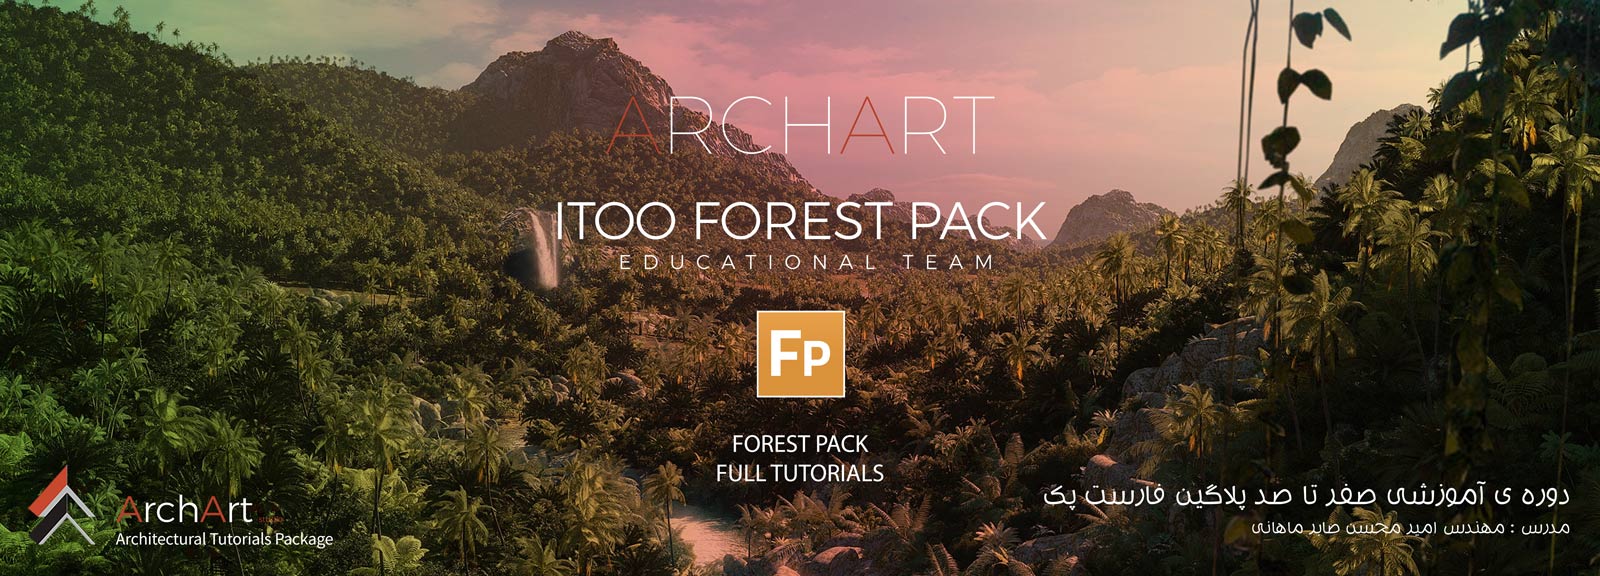 جلسه ی سوم پلاگین فارست پک - Itoo Forest Pack